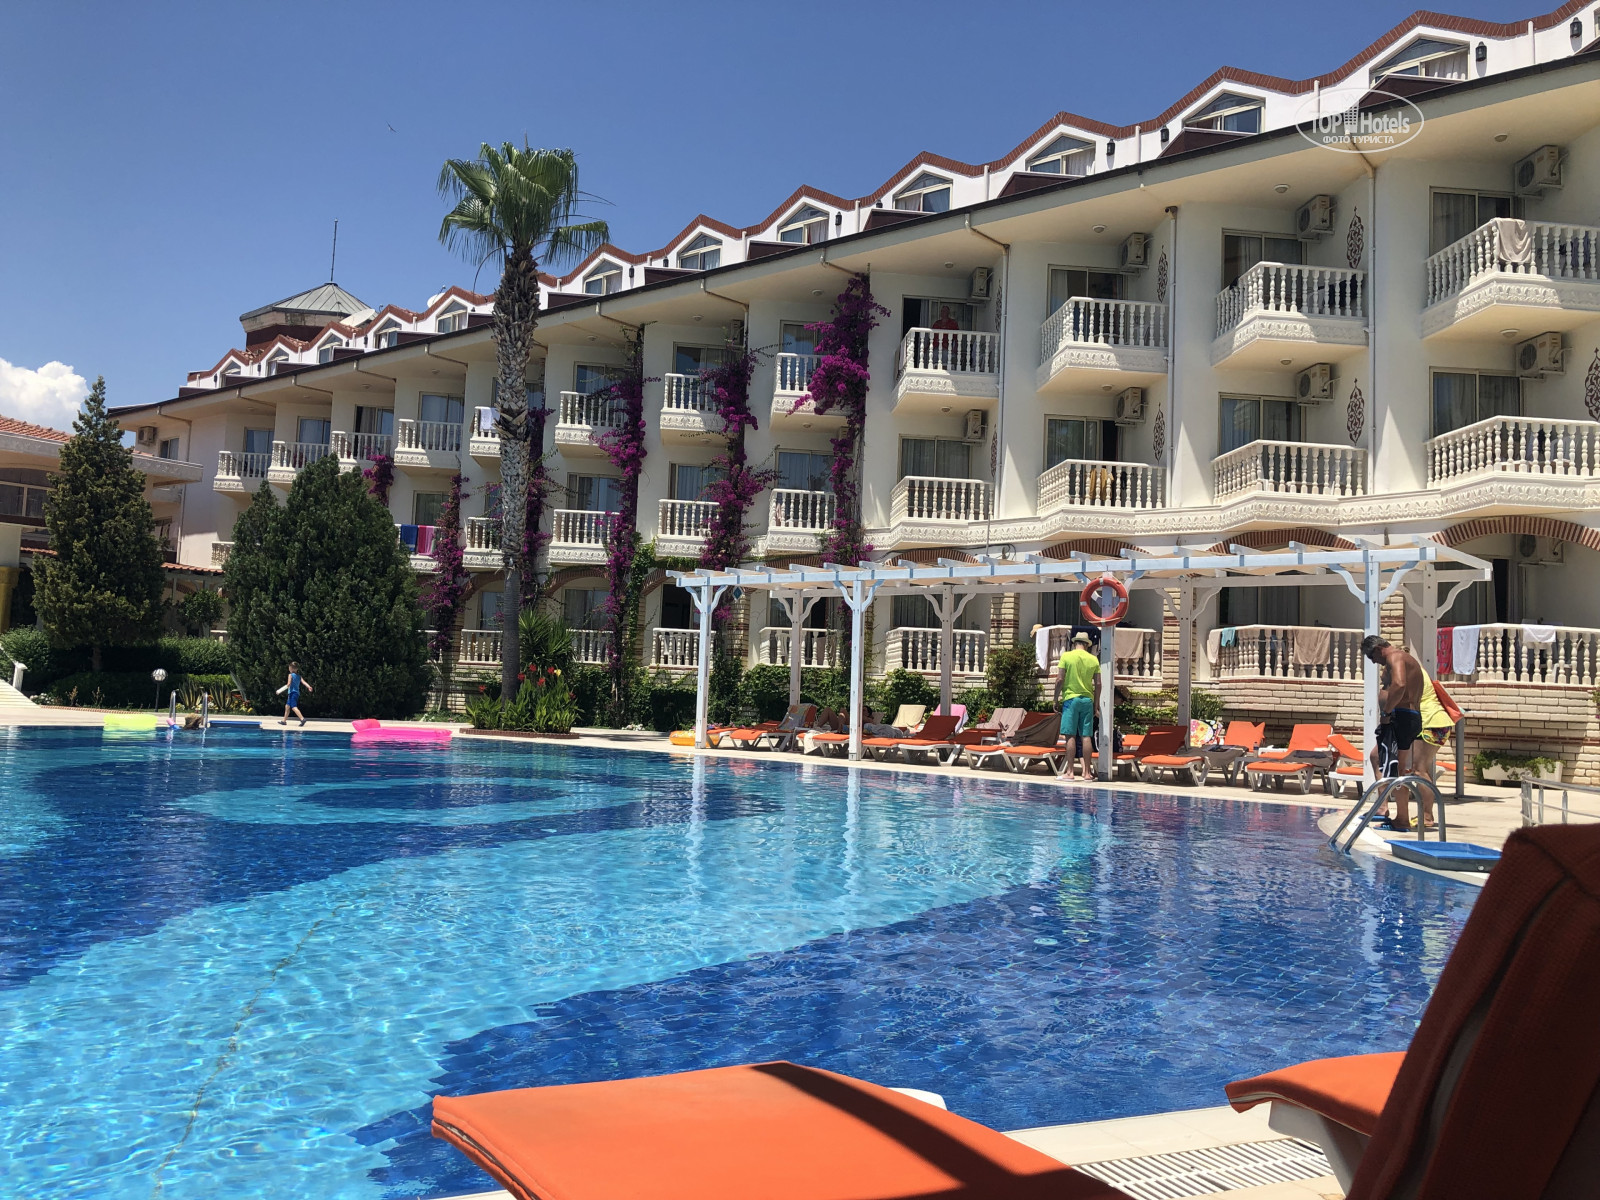 Larisa sultan beach hotel 4. Larissa Sultan's Beach Hotel 4 Турция Кемер.